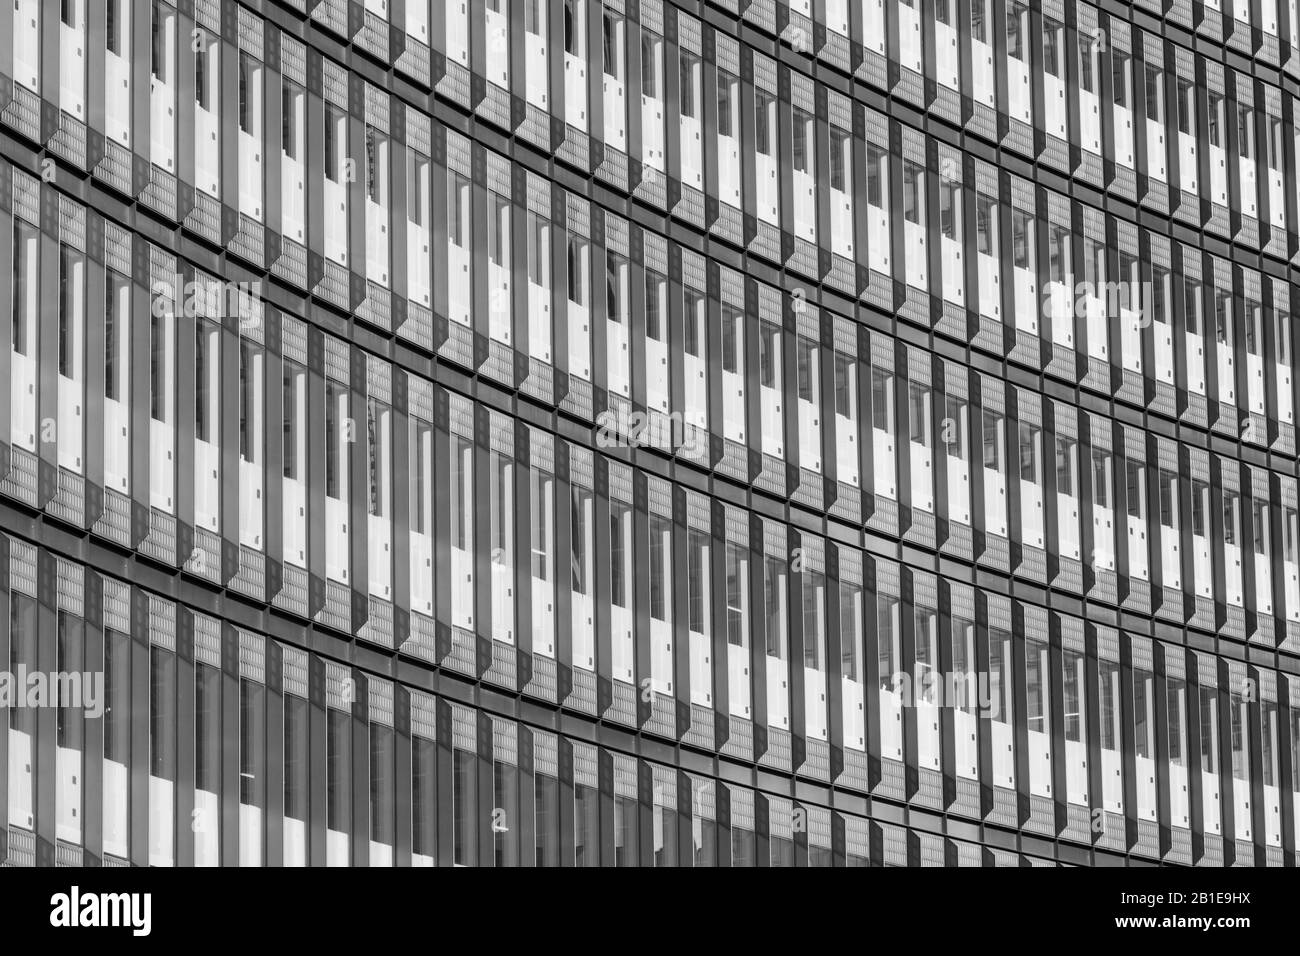 Facade of new office development at 100 Liverpool Street, City of London EC2, UK. Stock Photo